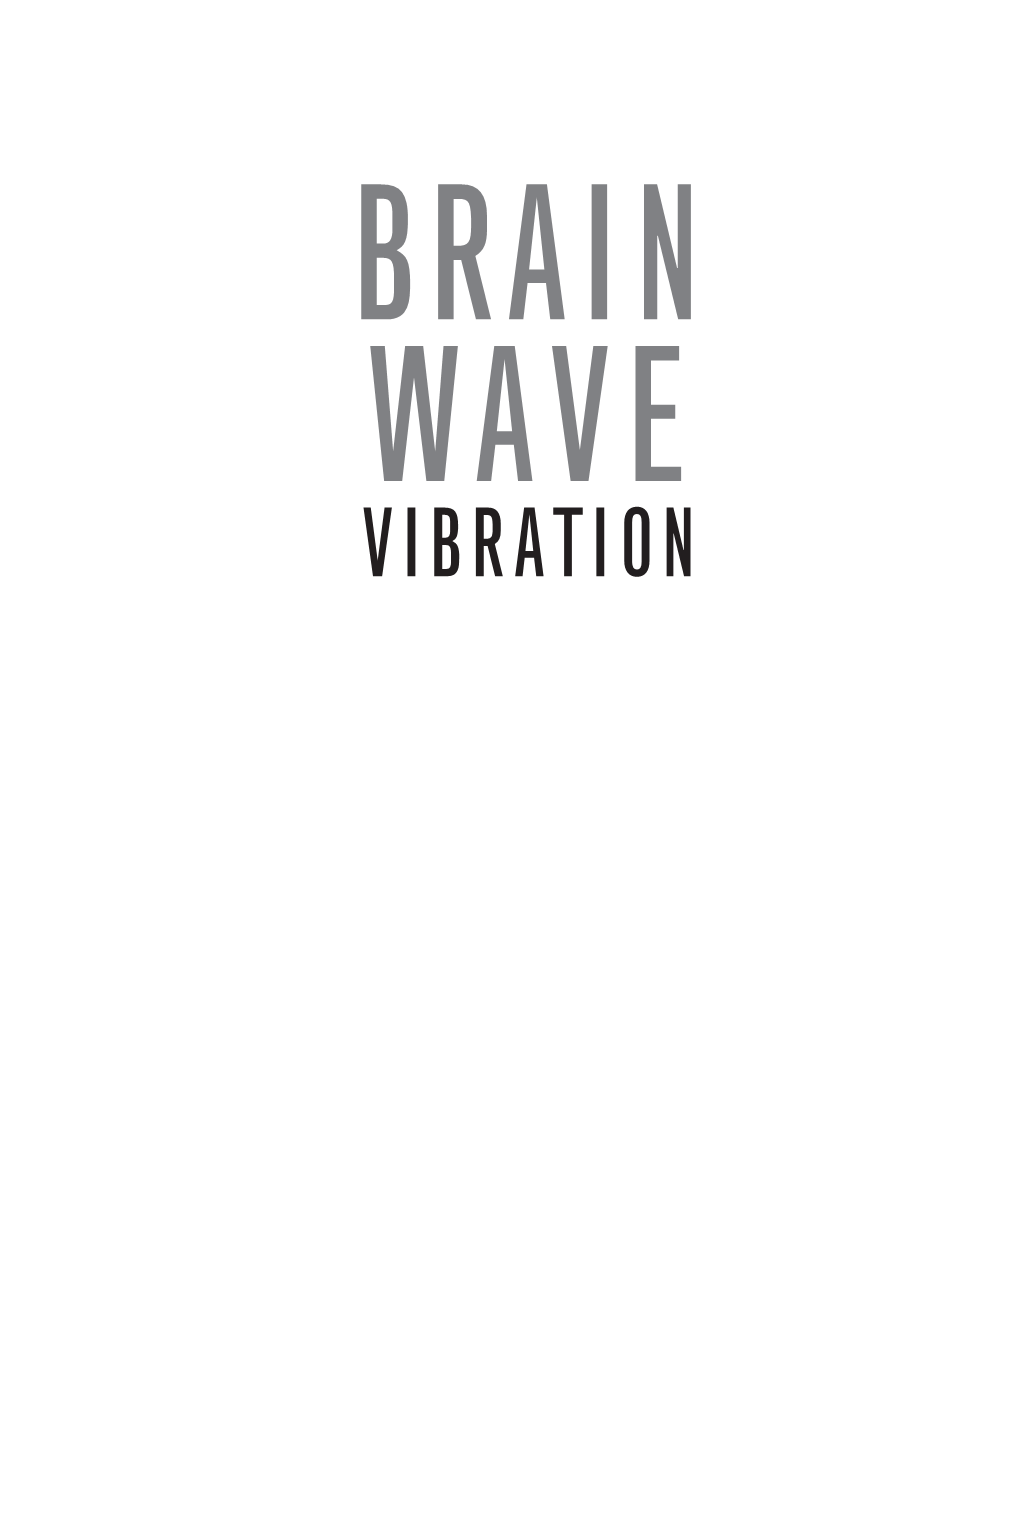 The Birth of Brain Wave Vibration